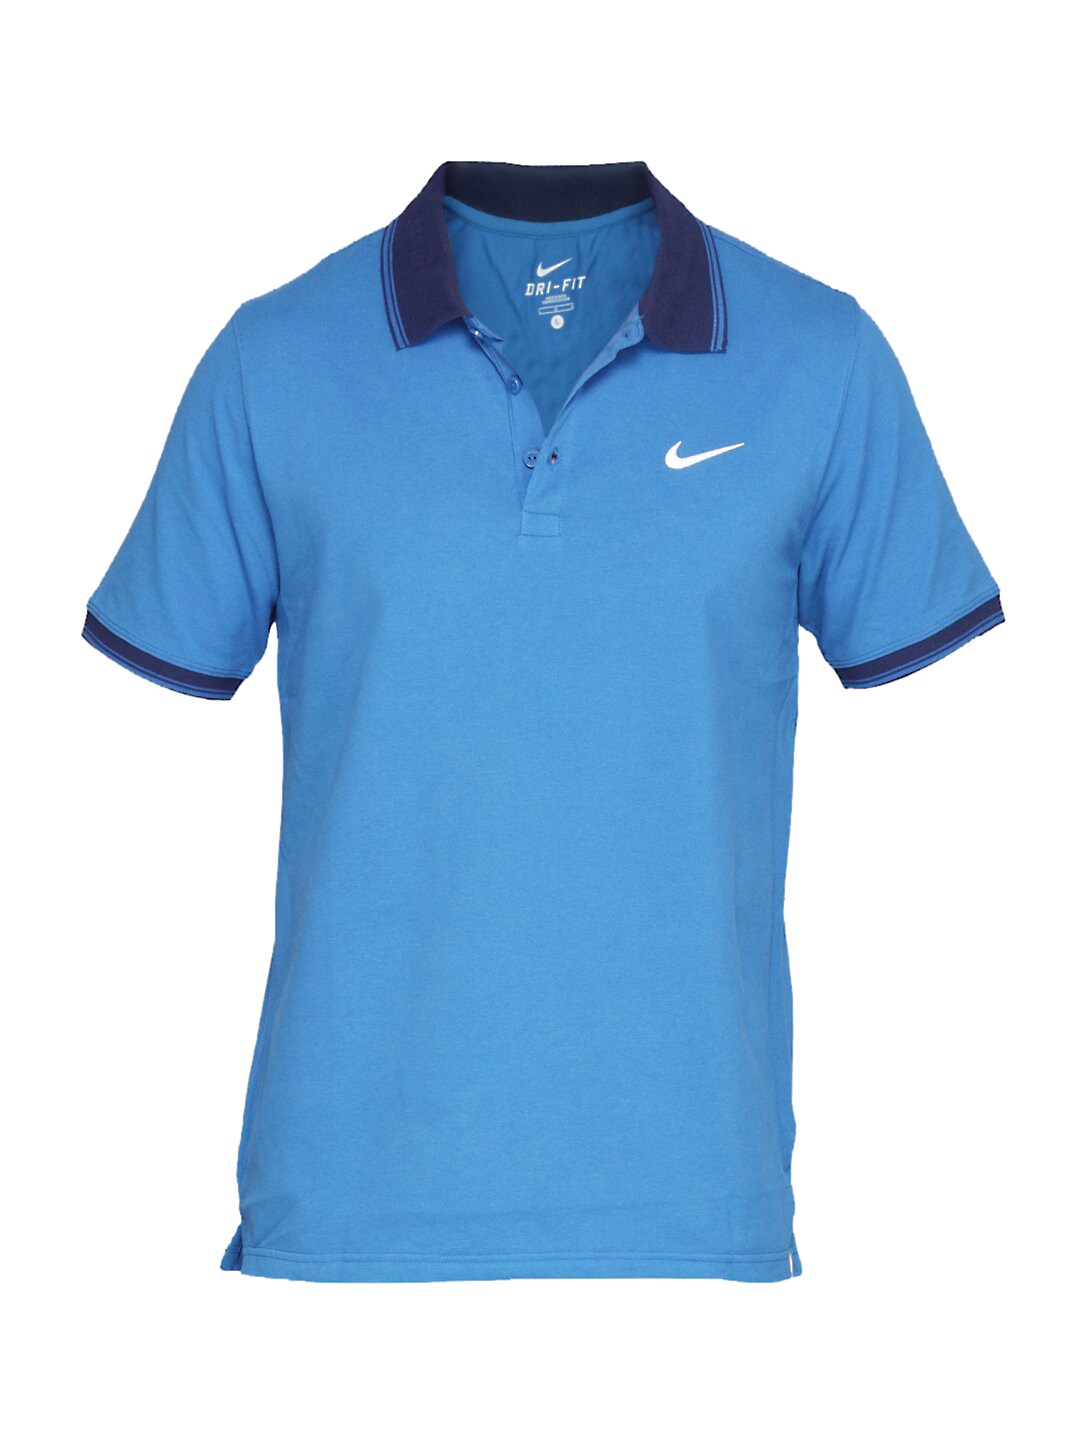 Nike Men's Pique Blue Polo T-Shirt